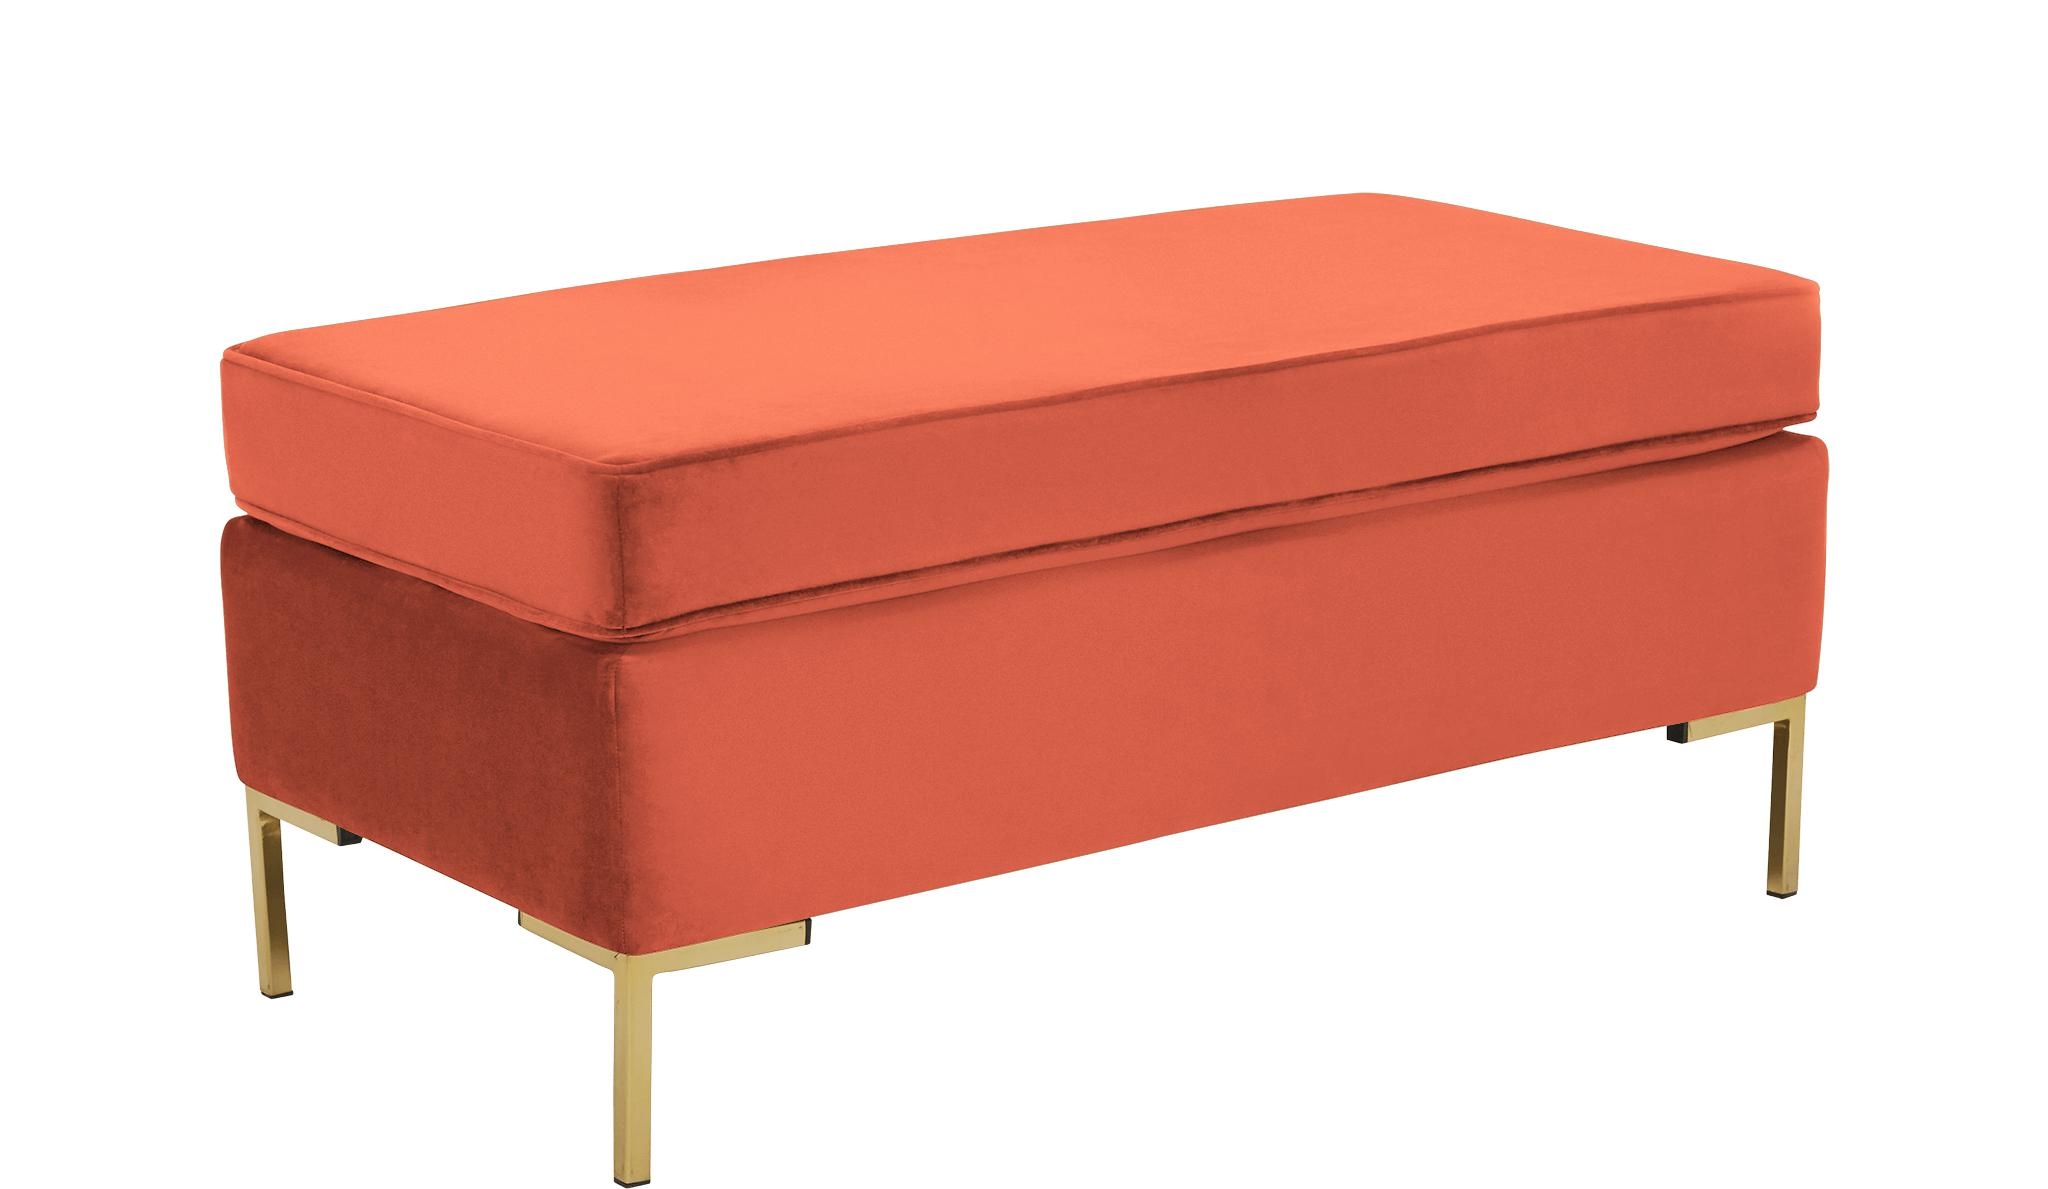 Orange Dee Mid Century Modern Bench with Storage - Key Largo Coral - Image 1